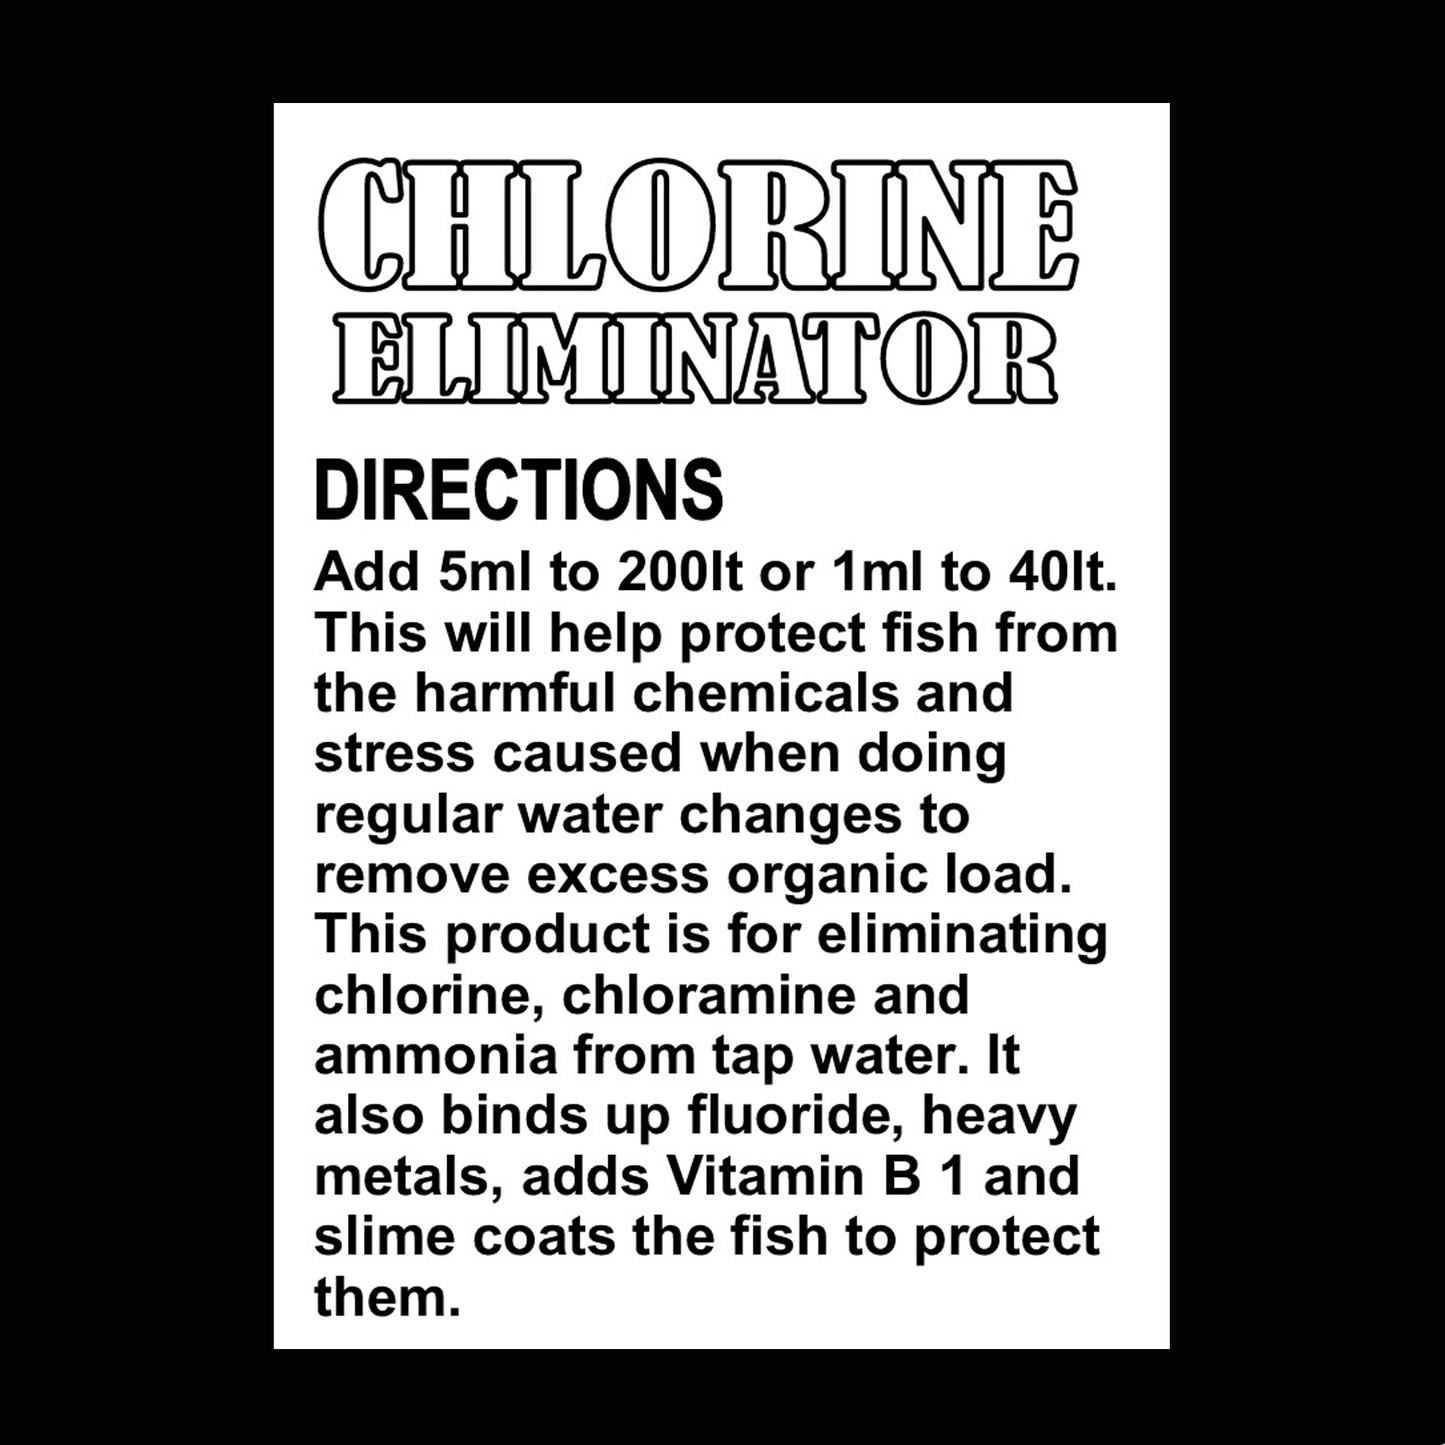 Chlorine Eliminator Concentrate 125ml